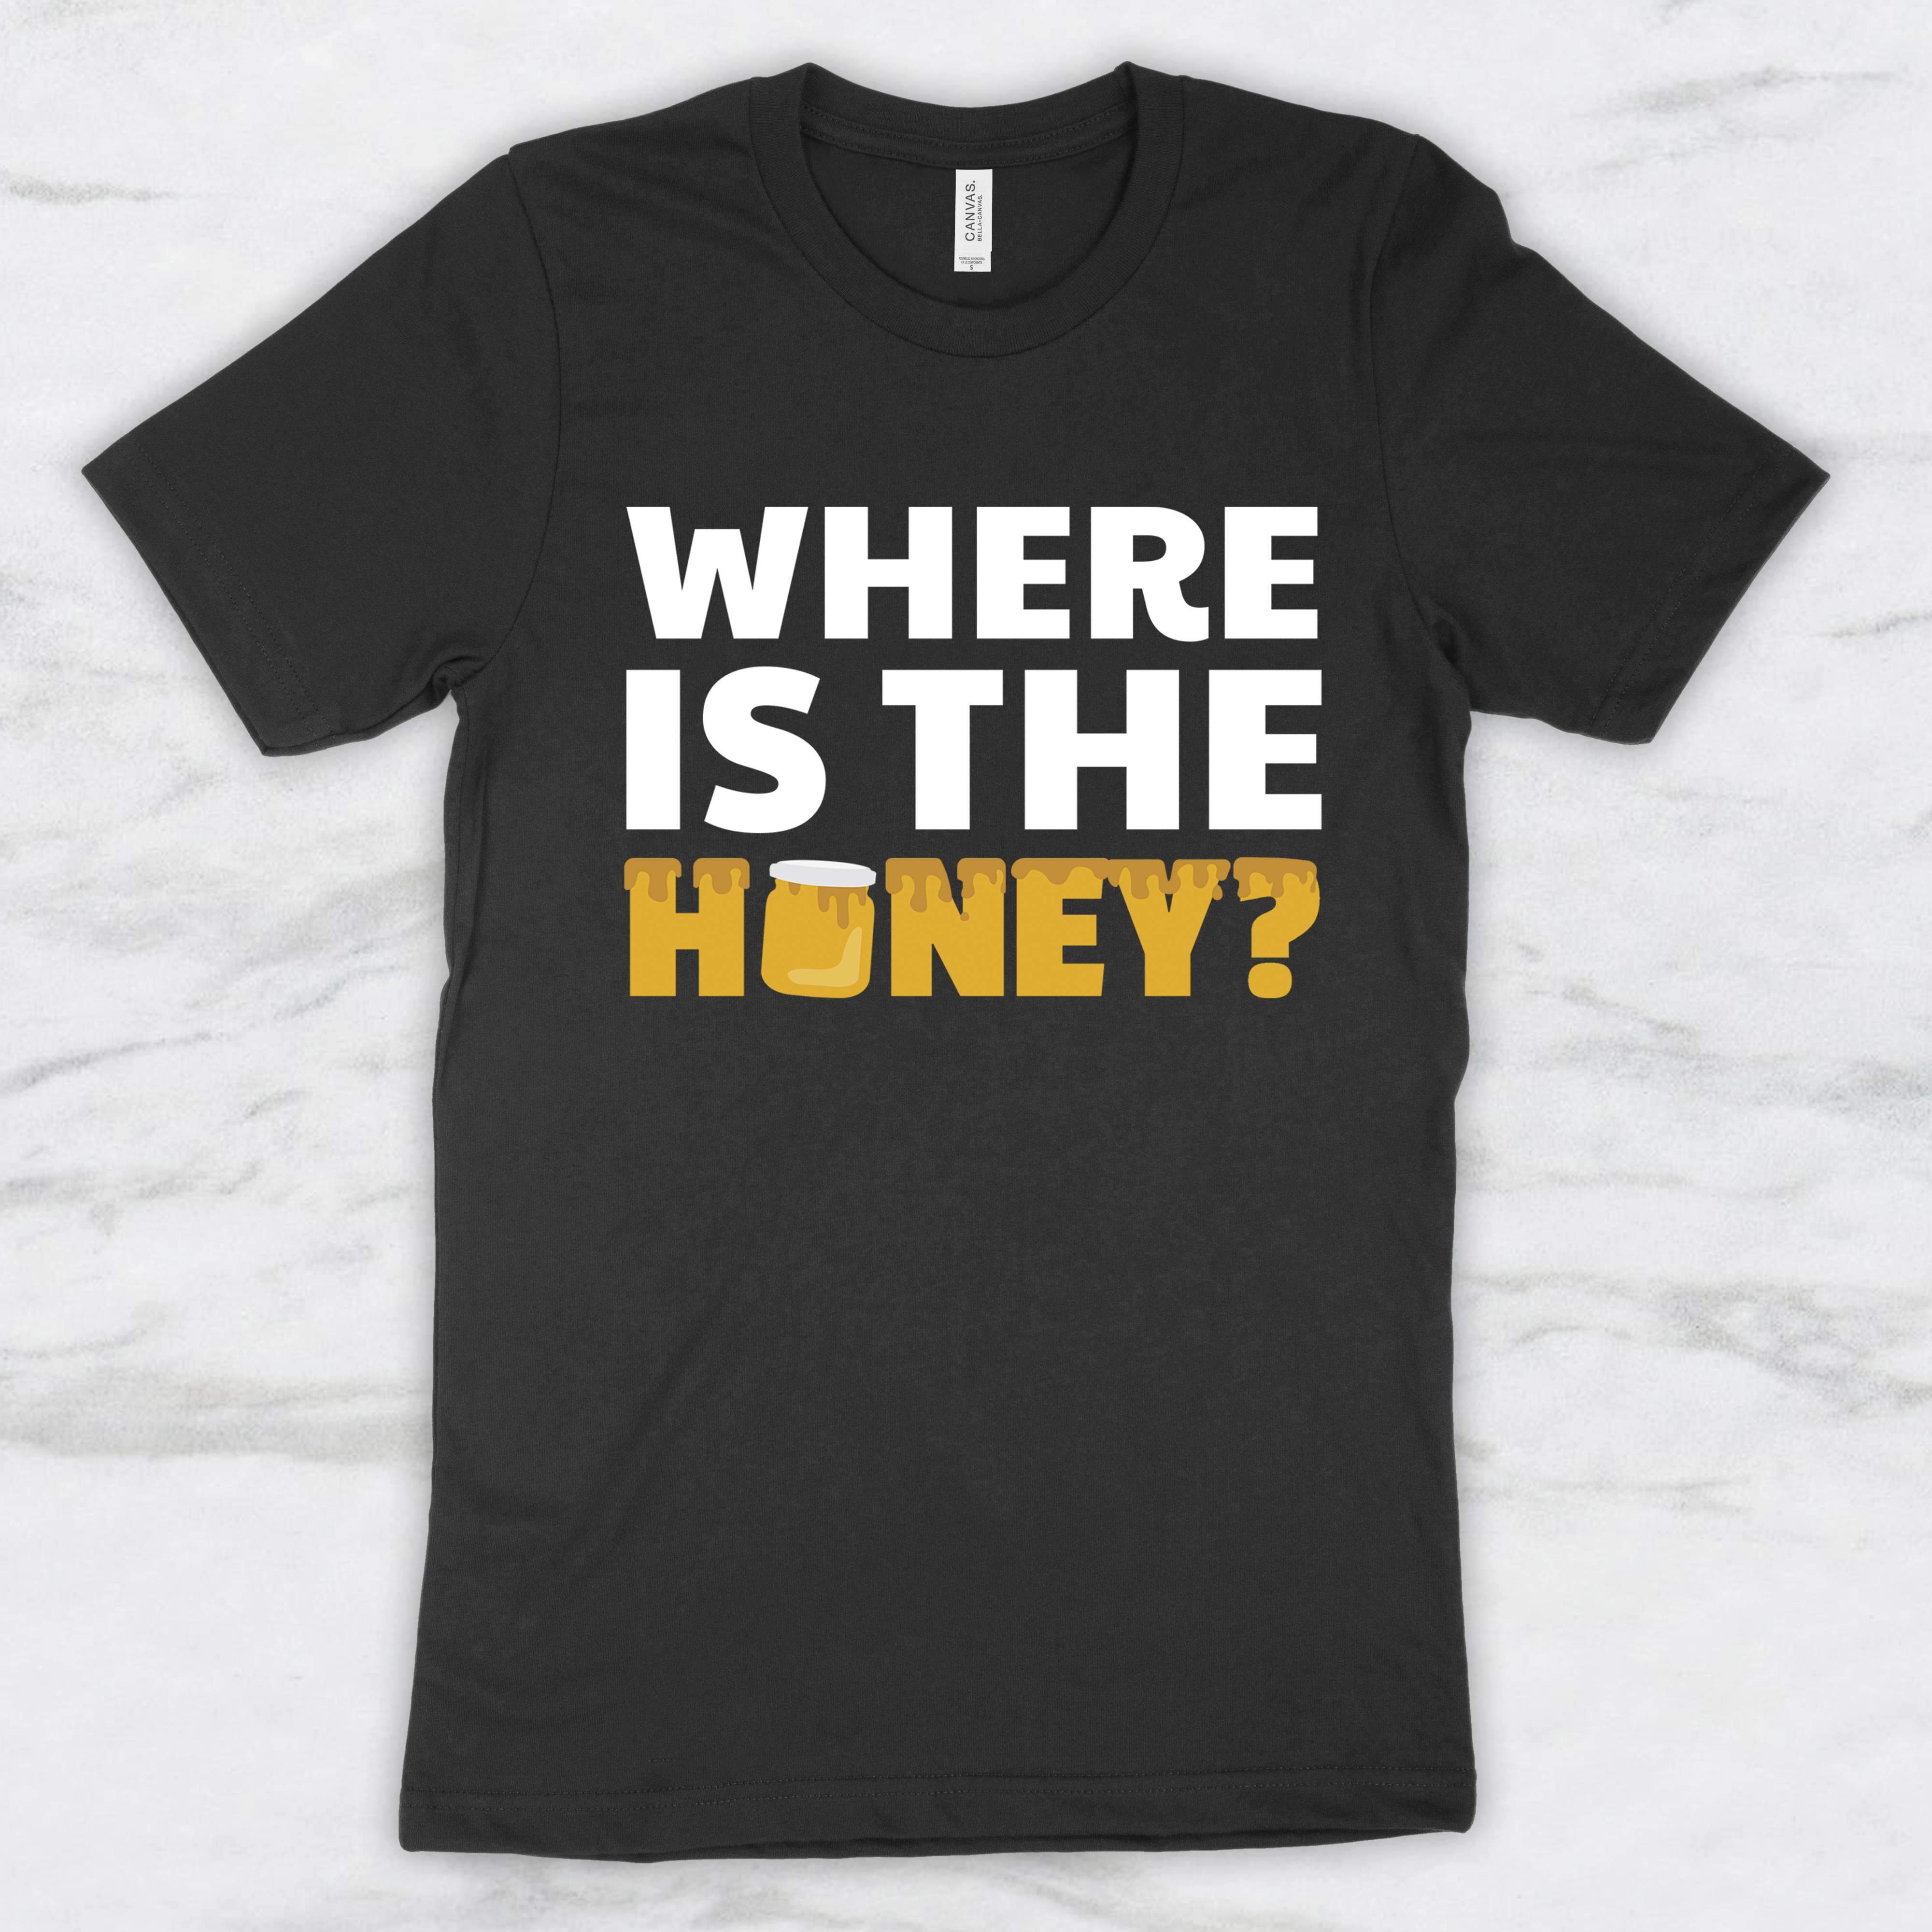 Where Is The Honey? T-Shirt, Tank Top, Hoodie For Men Women & Kids